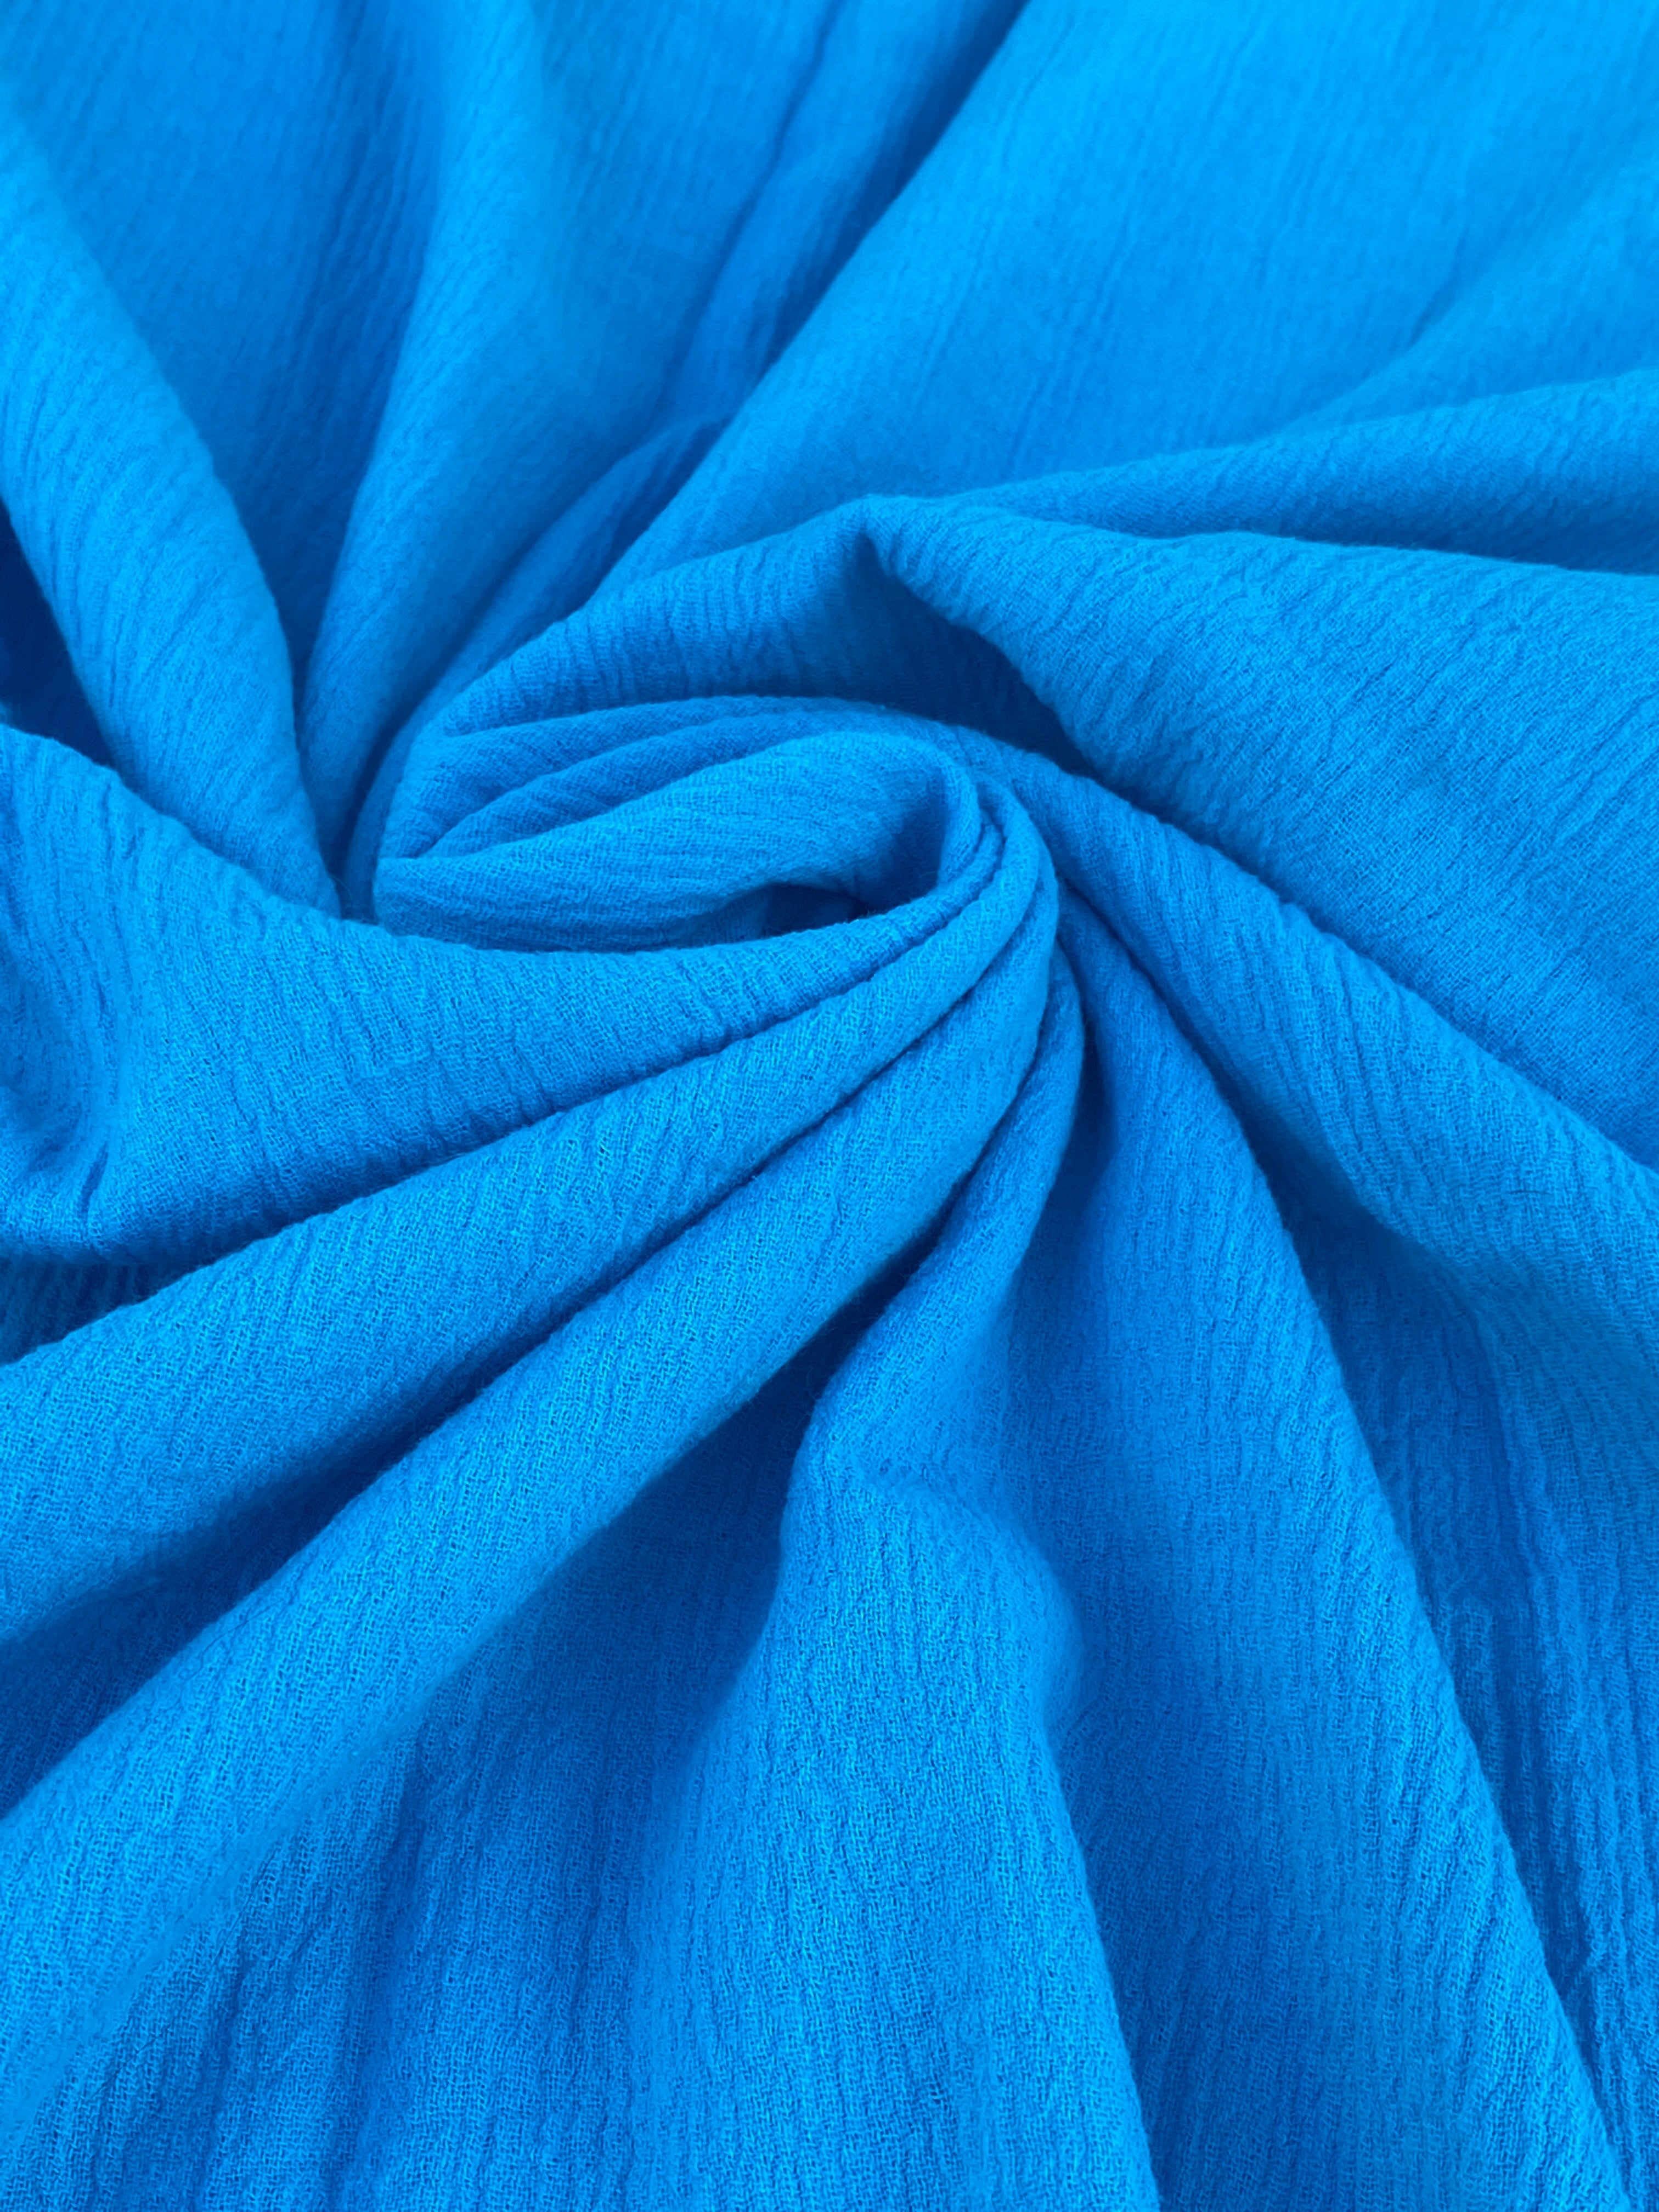 Turquoise Crinkle Cotton Gauze, cotton gauze fabric, baby blue gauze fabric, dark blue gauze, cotton for woman, double gauze cheap, coton gauze for bride, cotton gauze in low price